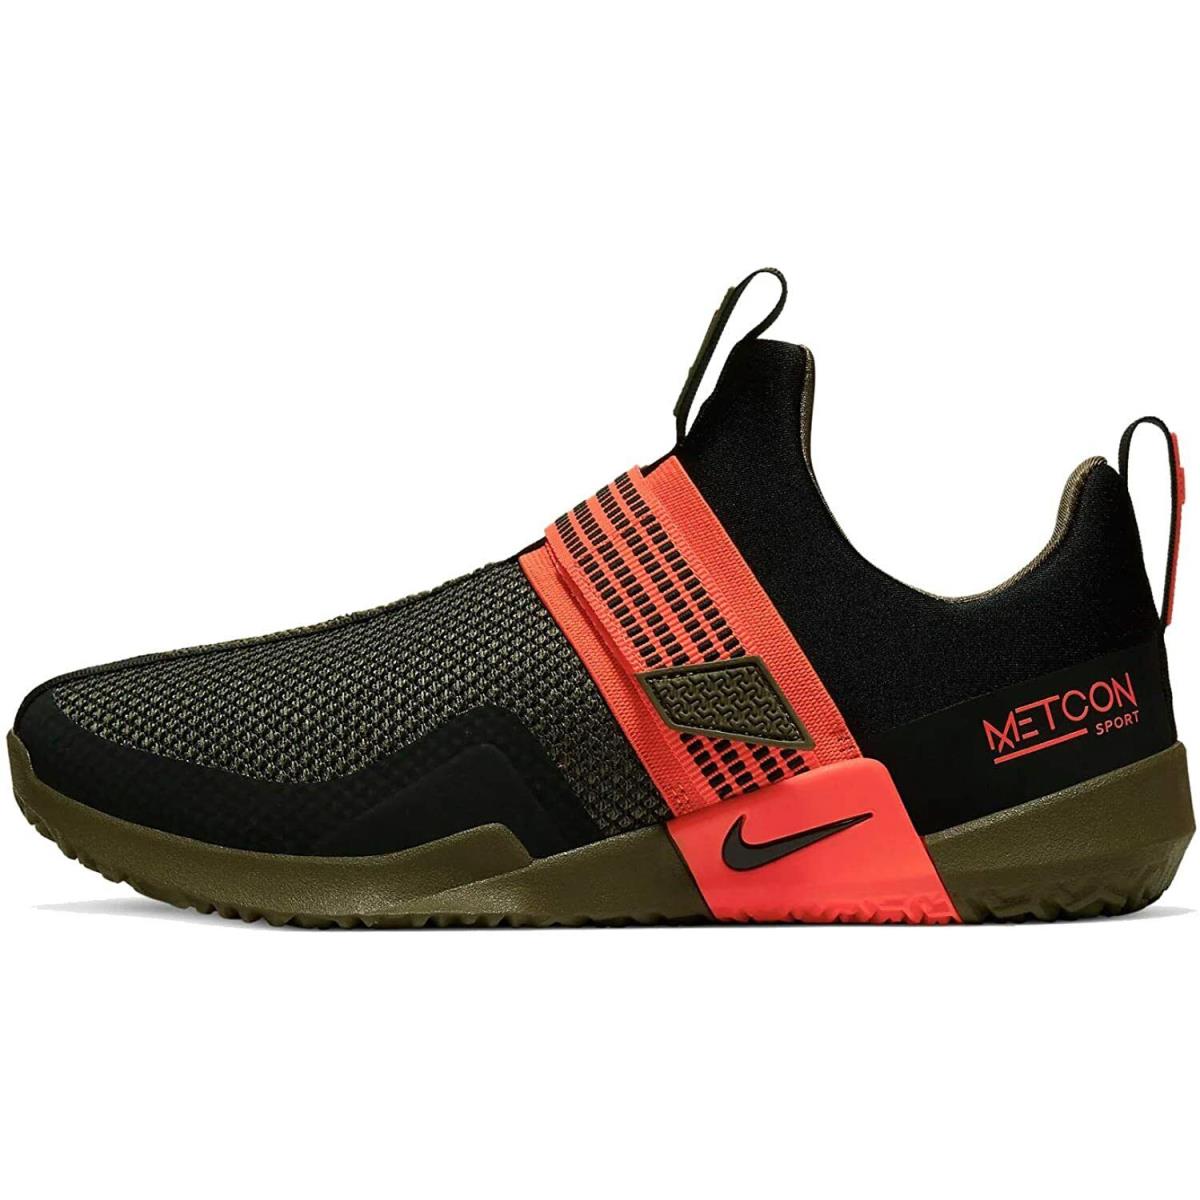 Nike shoes Metcon Sport - Medium Olive/Black 0